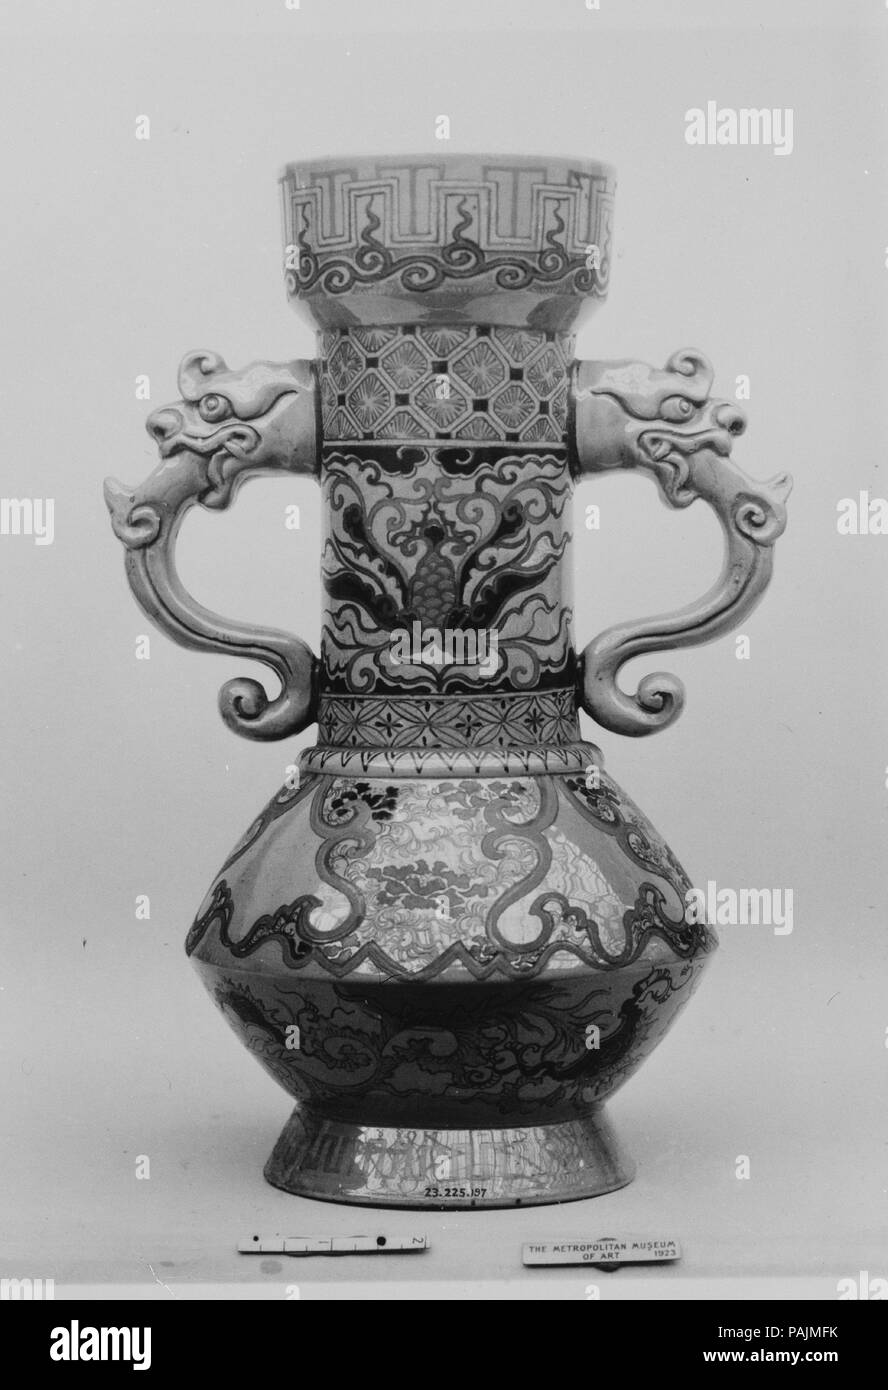 Vase. Culture: Japan. Dimensions: H. 12 in. (30.5 cm); Diam. 8 in. (20.3 cm). Date: 1825. Museum: Metropolitan Museum of Art, New York, USA. Stock Photo